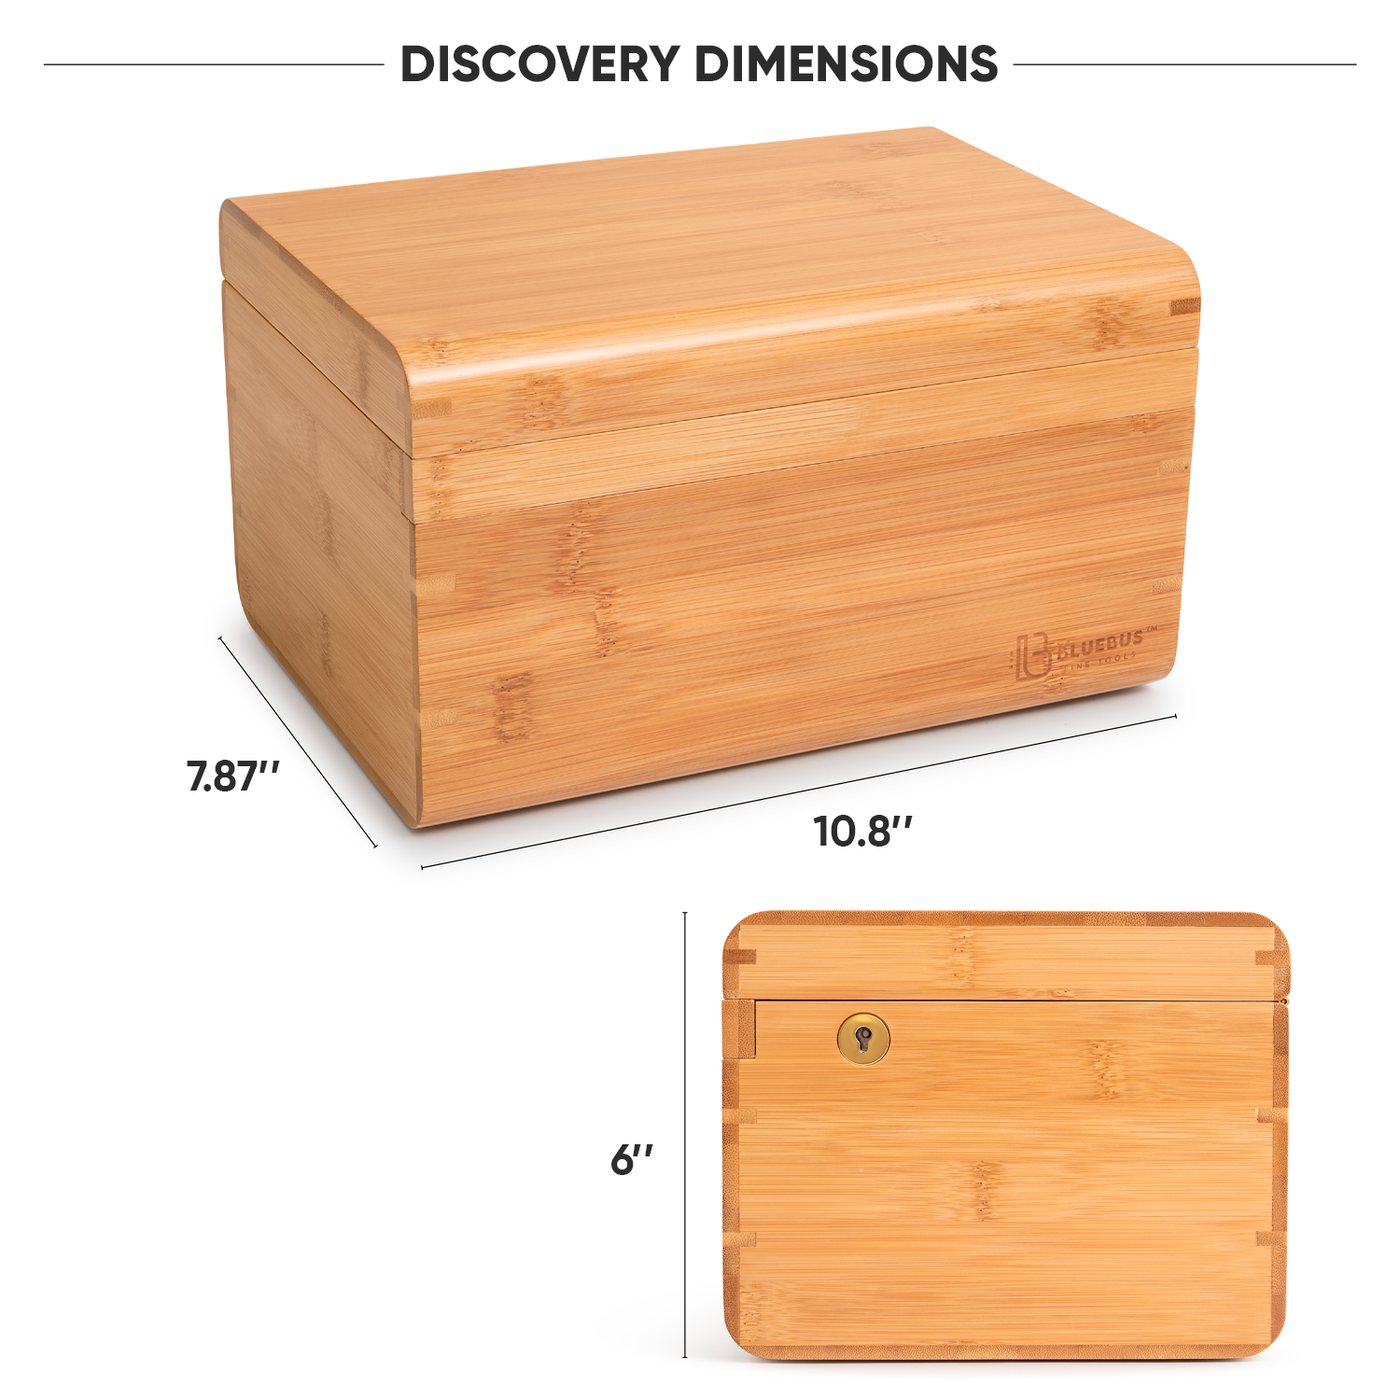 Discovery stash box 